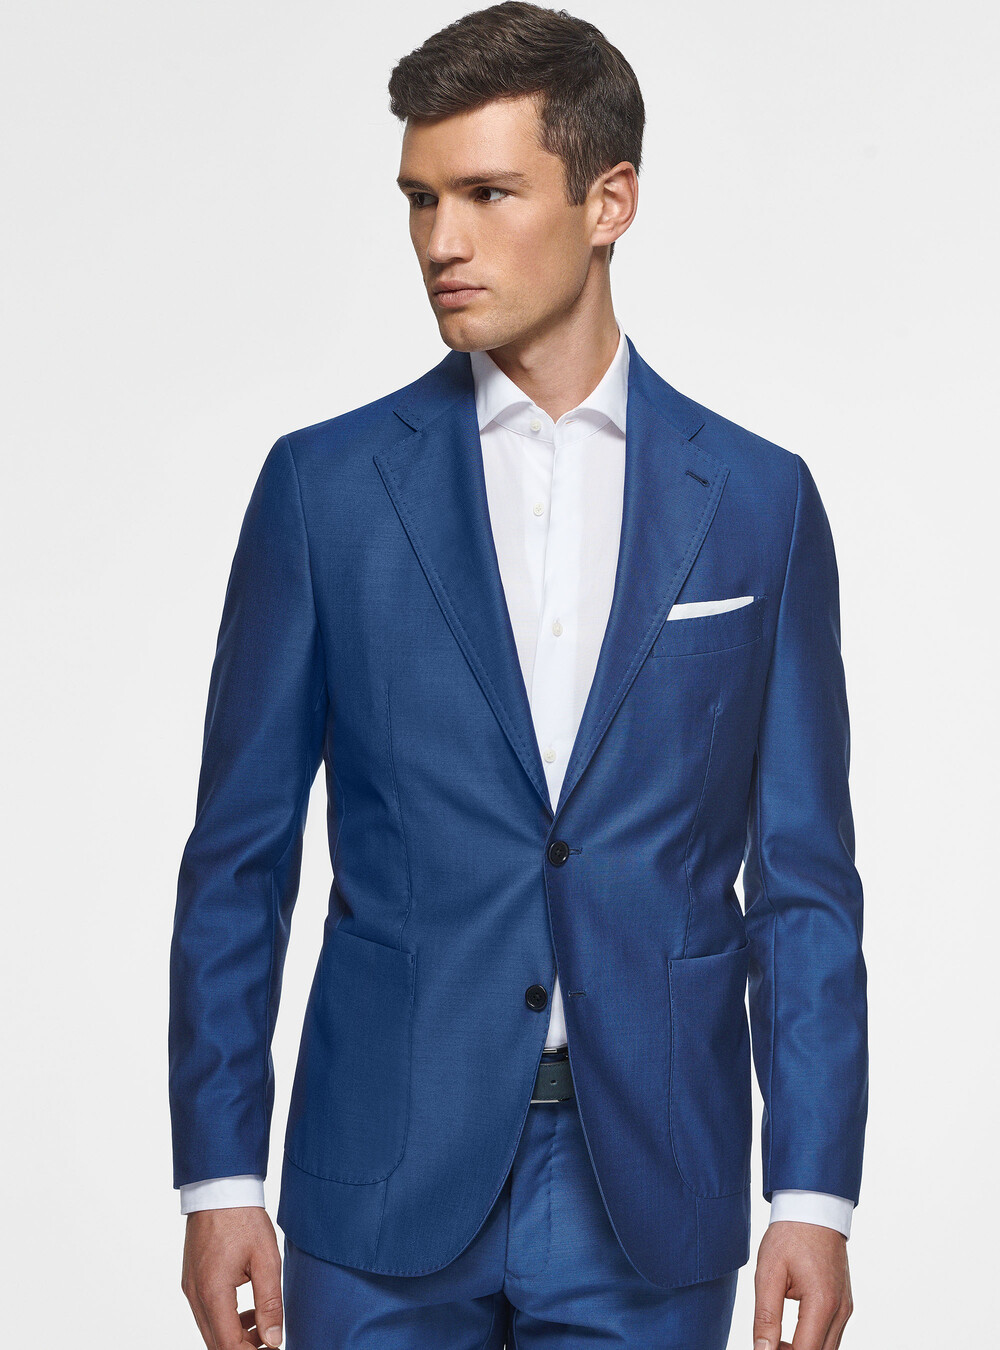 Suit blazer in pure superfine wool 110's Vitale Barberis Canonico |  GutteridgeEU | Suits Uomo